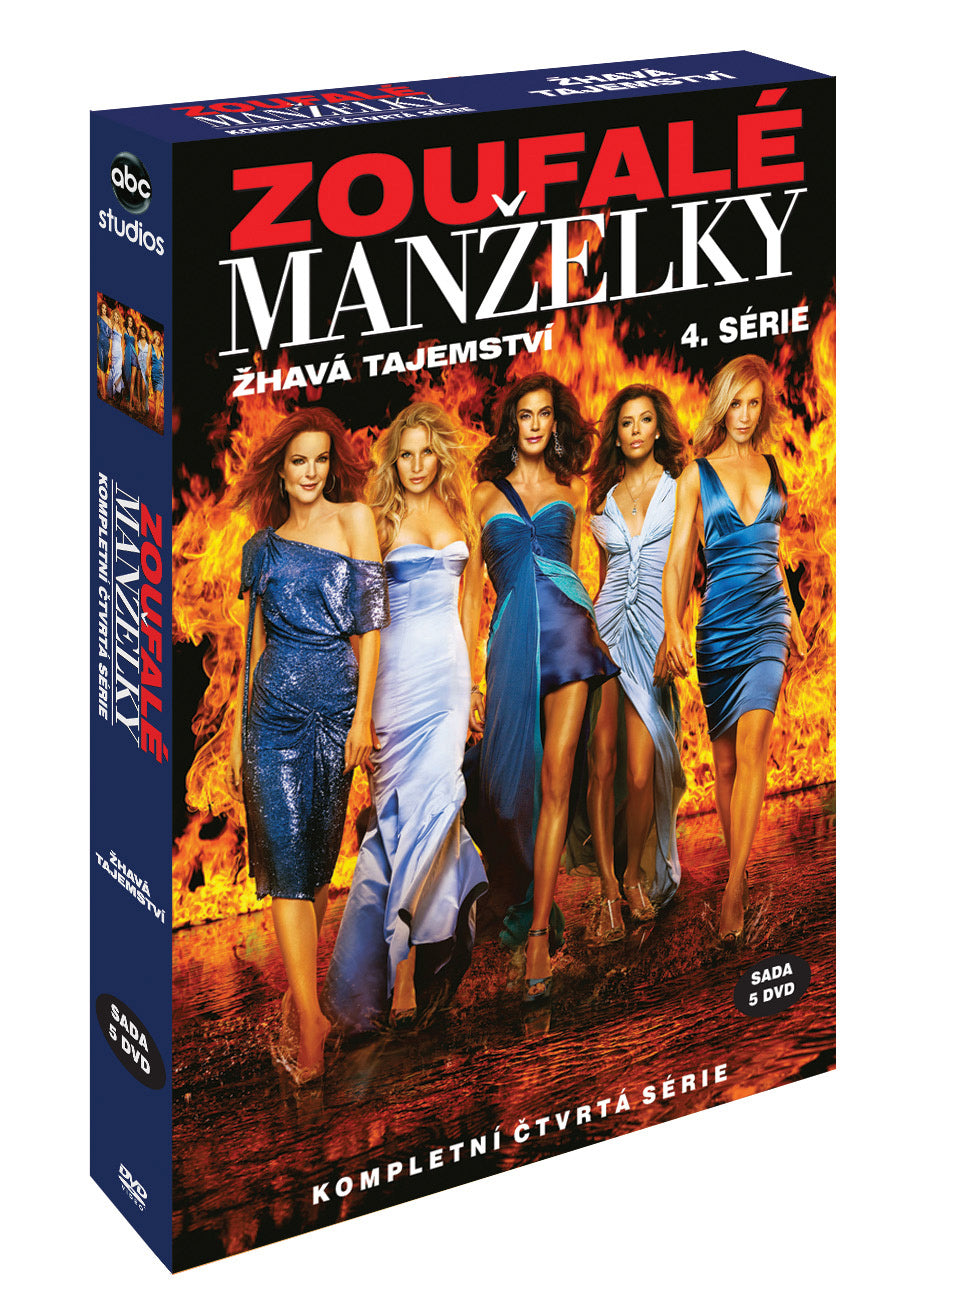 Zoufale manzelky 4. serie 5DVD / Desperate Housewifes Season 4